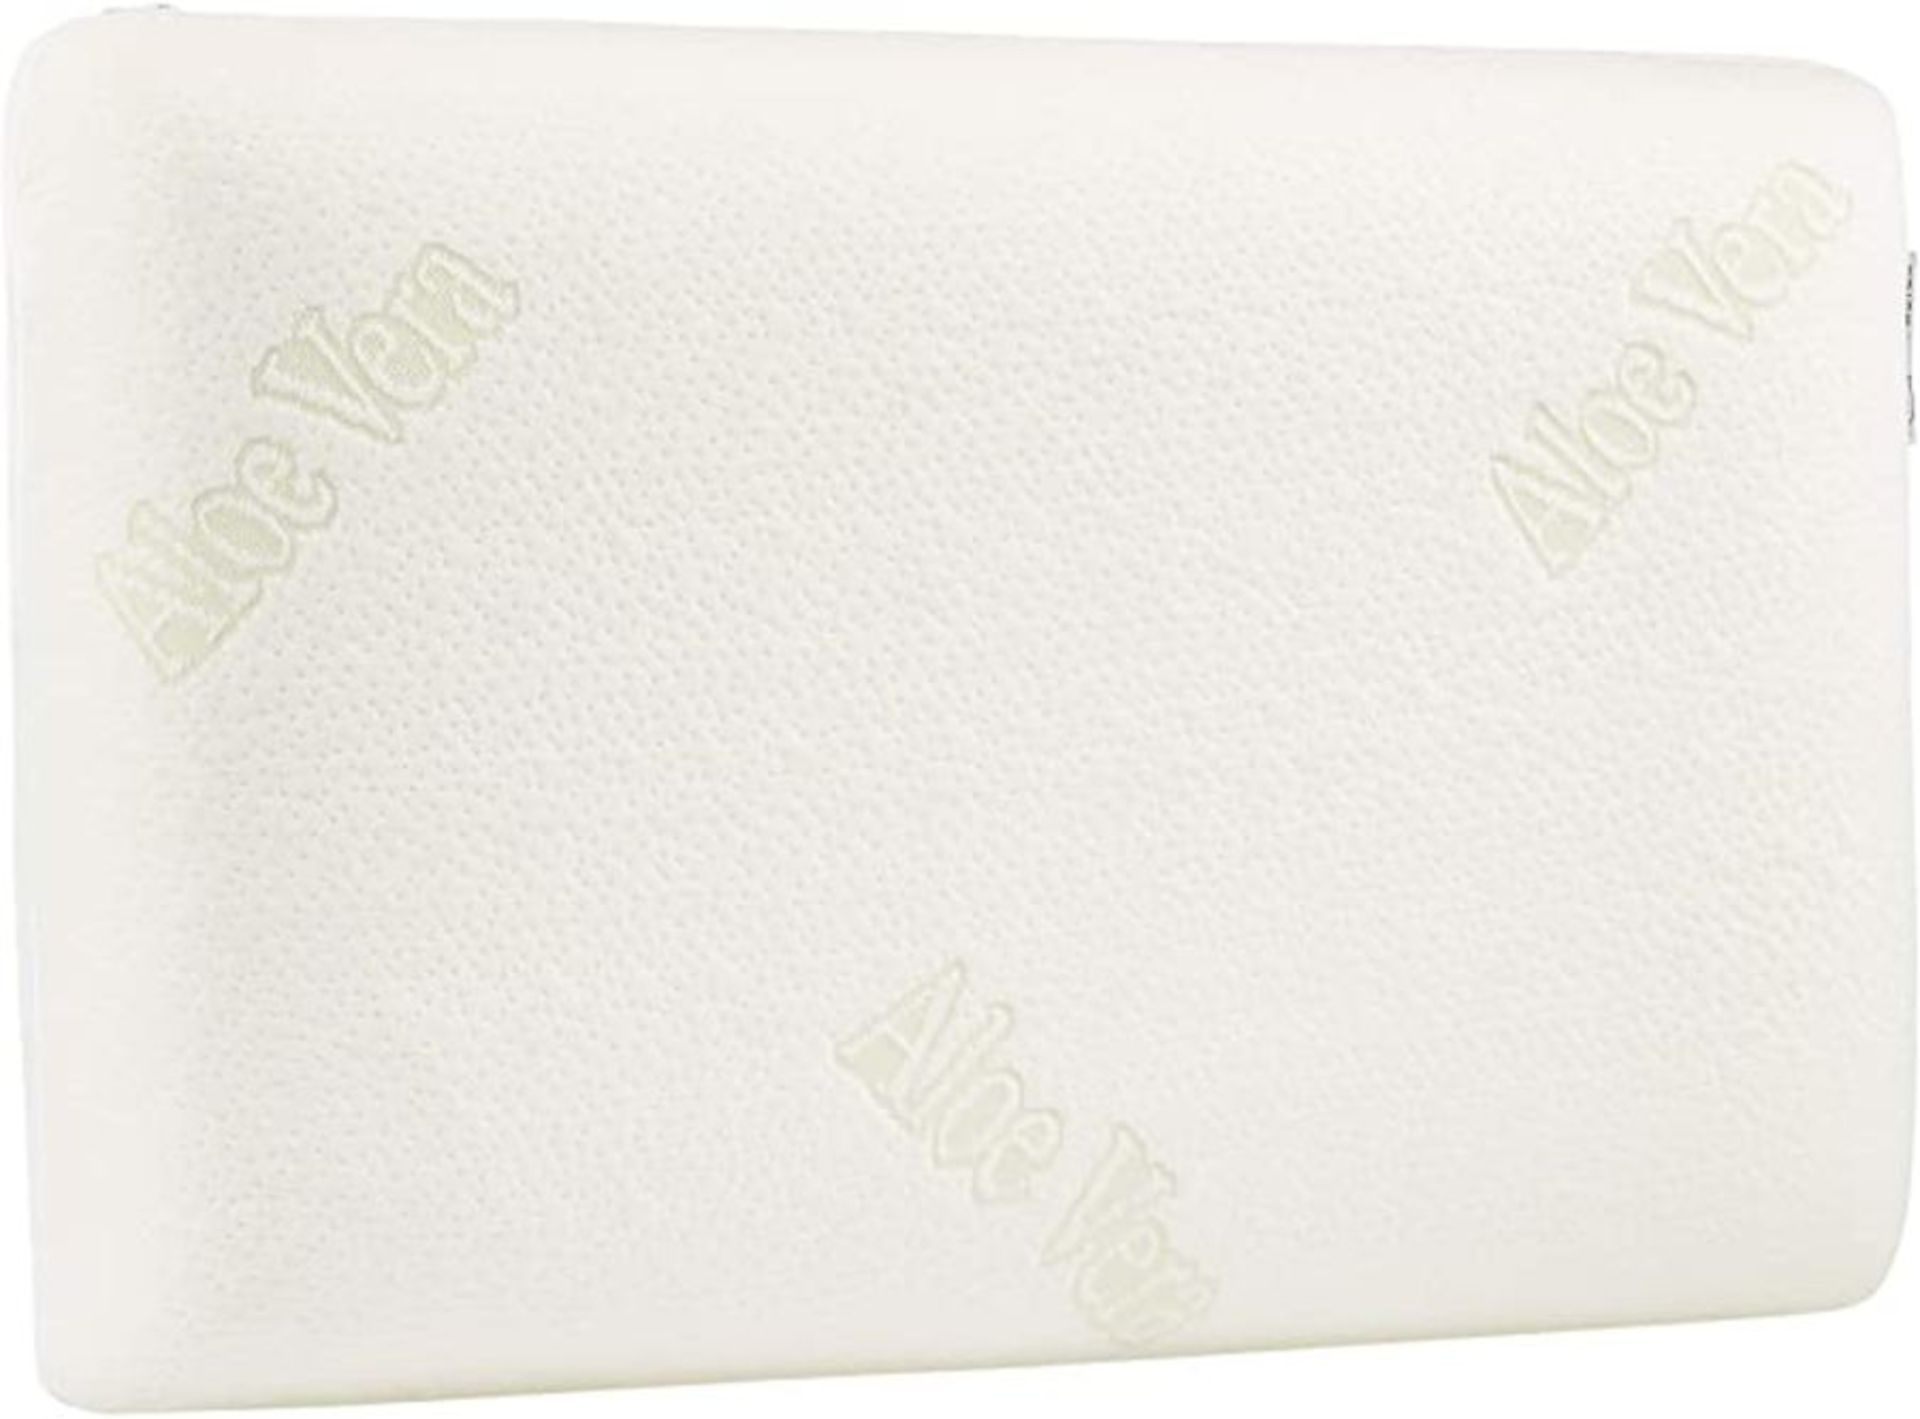 Amazon Basics Memory-Foam Pillow with Aloe Vera - 60 x 40 x 12 cm - RRP£29.99 (LPNWE065408367 -